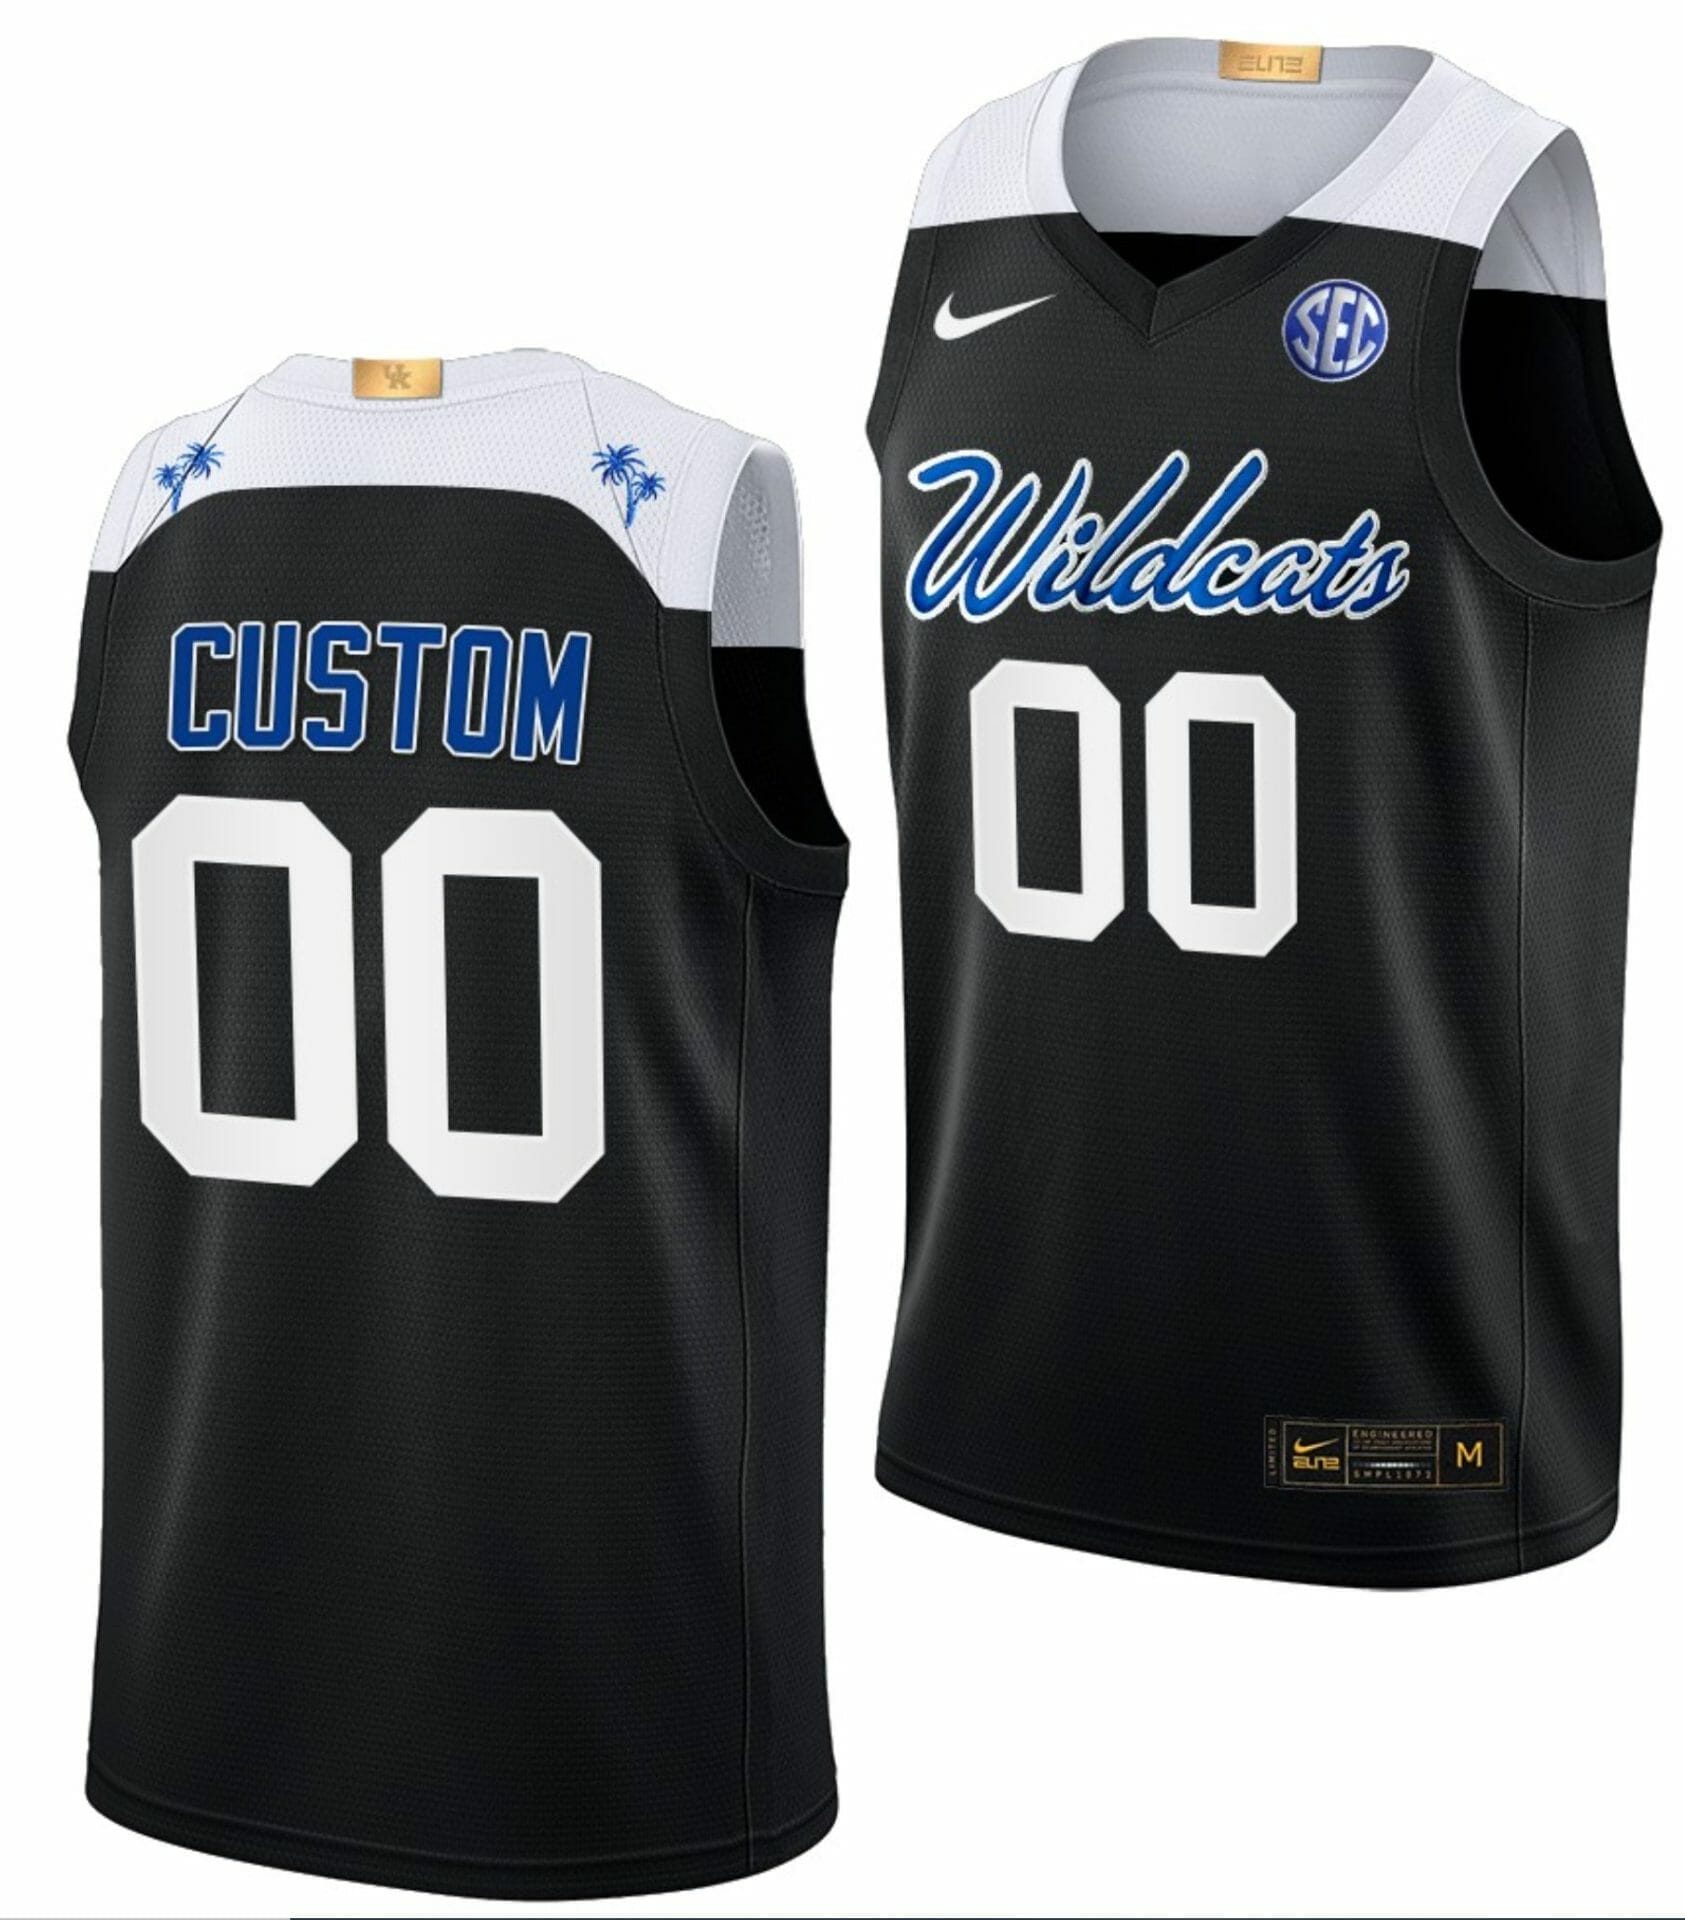 Elite Wildcat - Custom Basketball Uniform